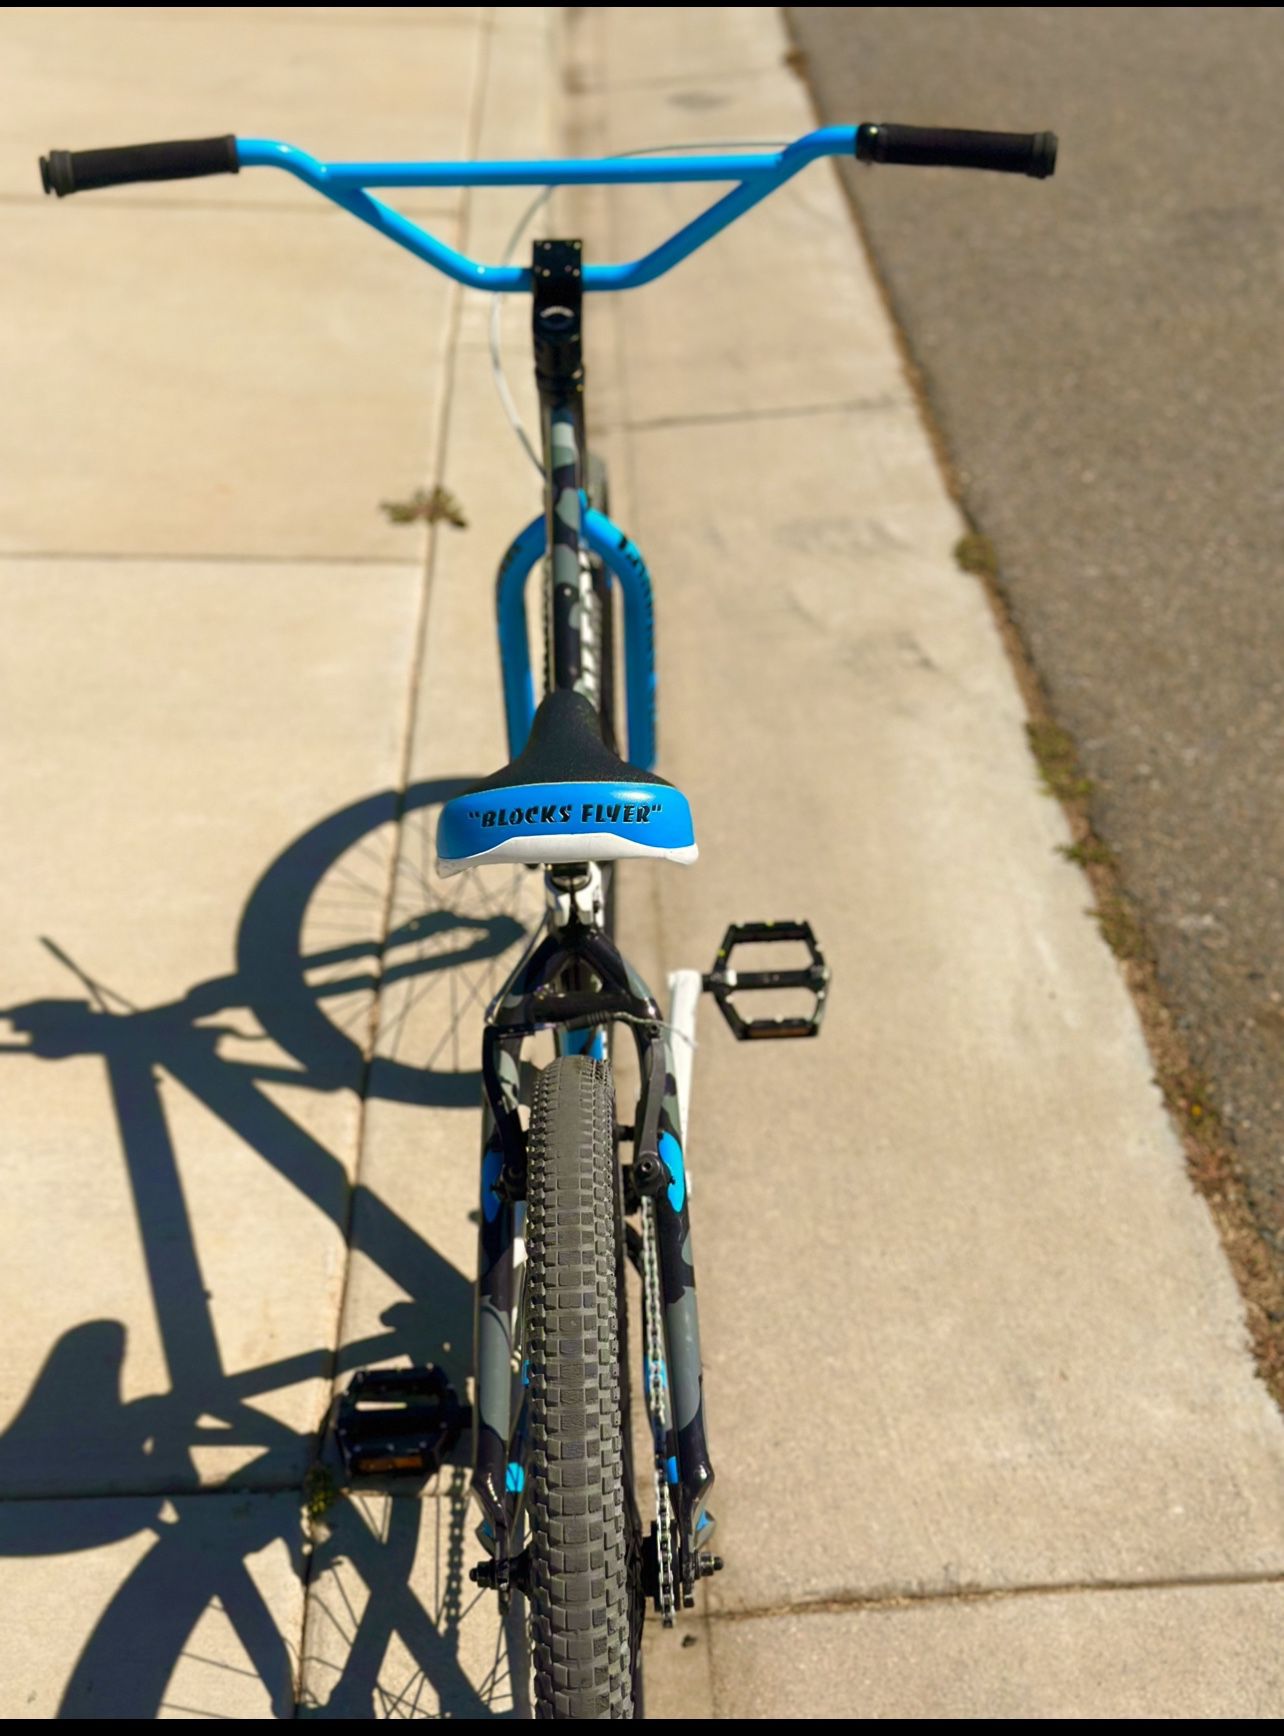 Blocks flyer se bike - Bicycle Accessories - Moorestown, New Jersey, Facebook Marketplace